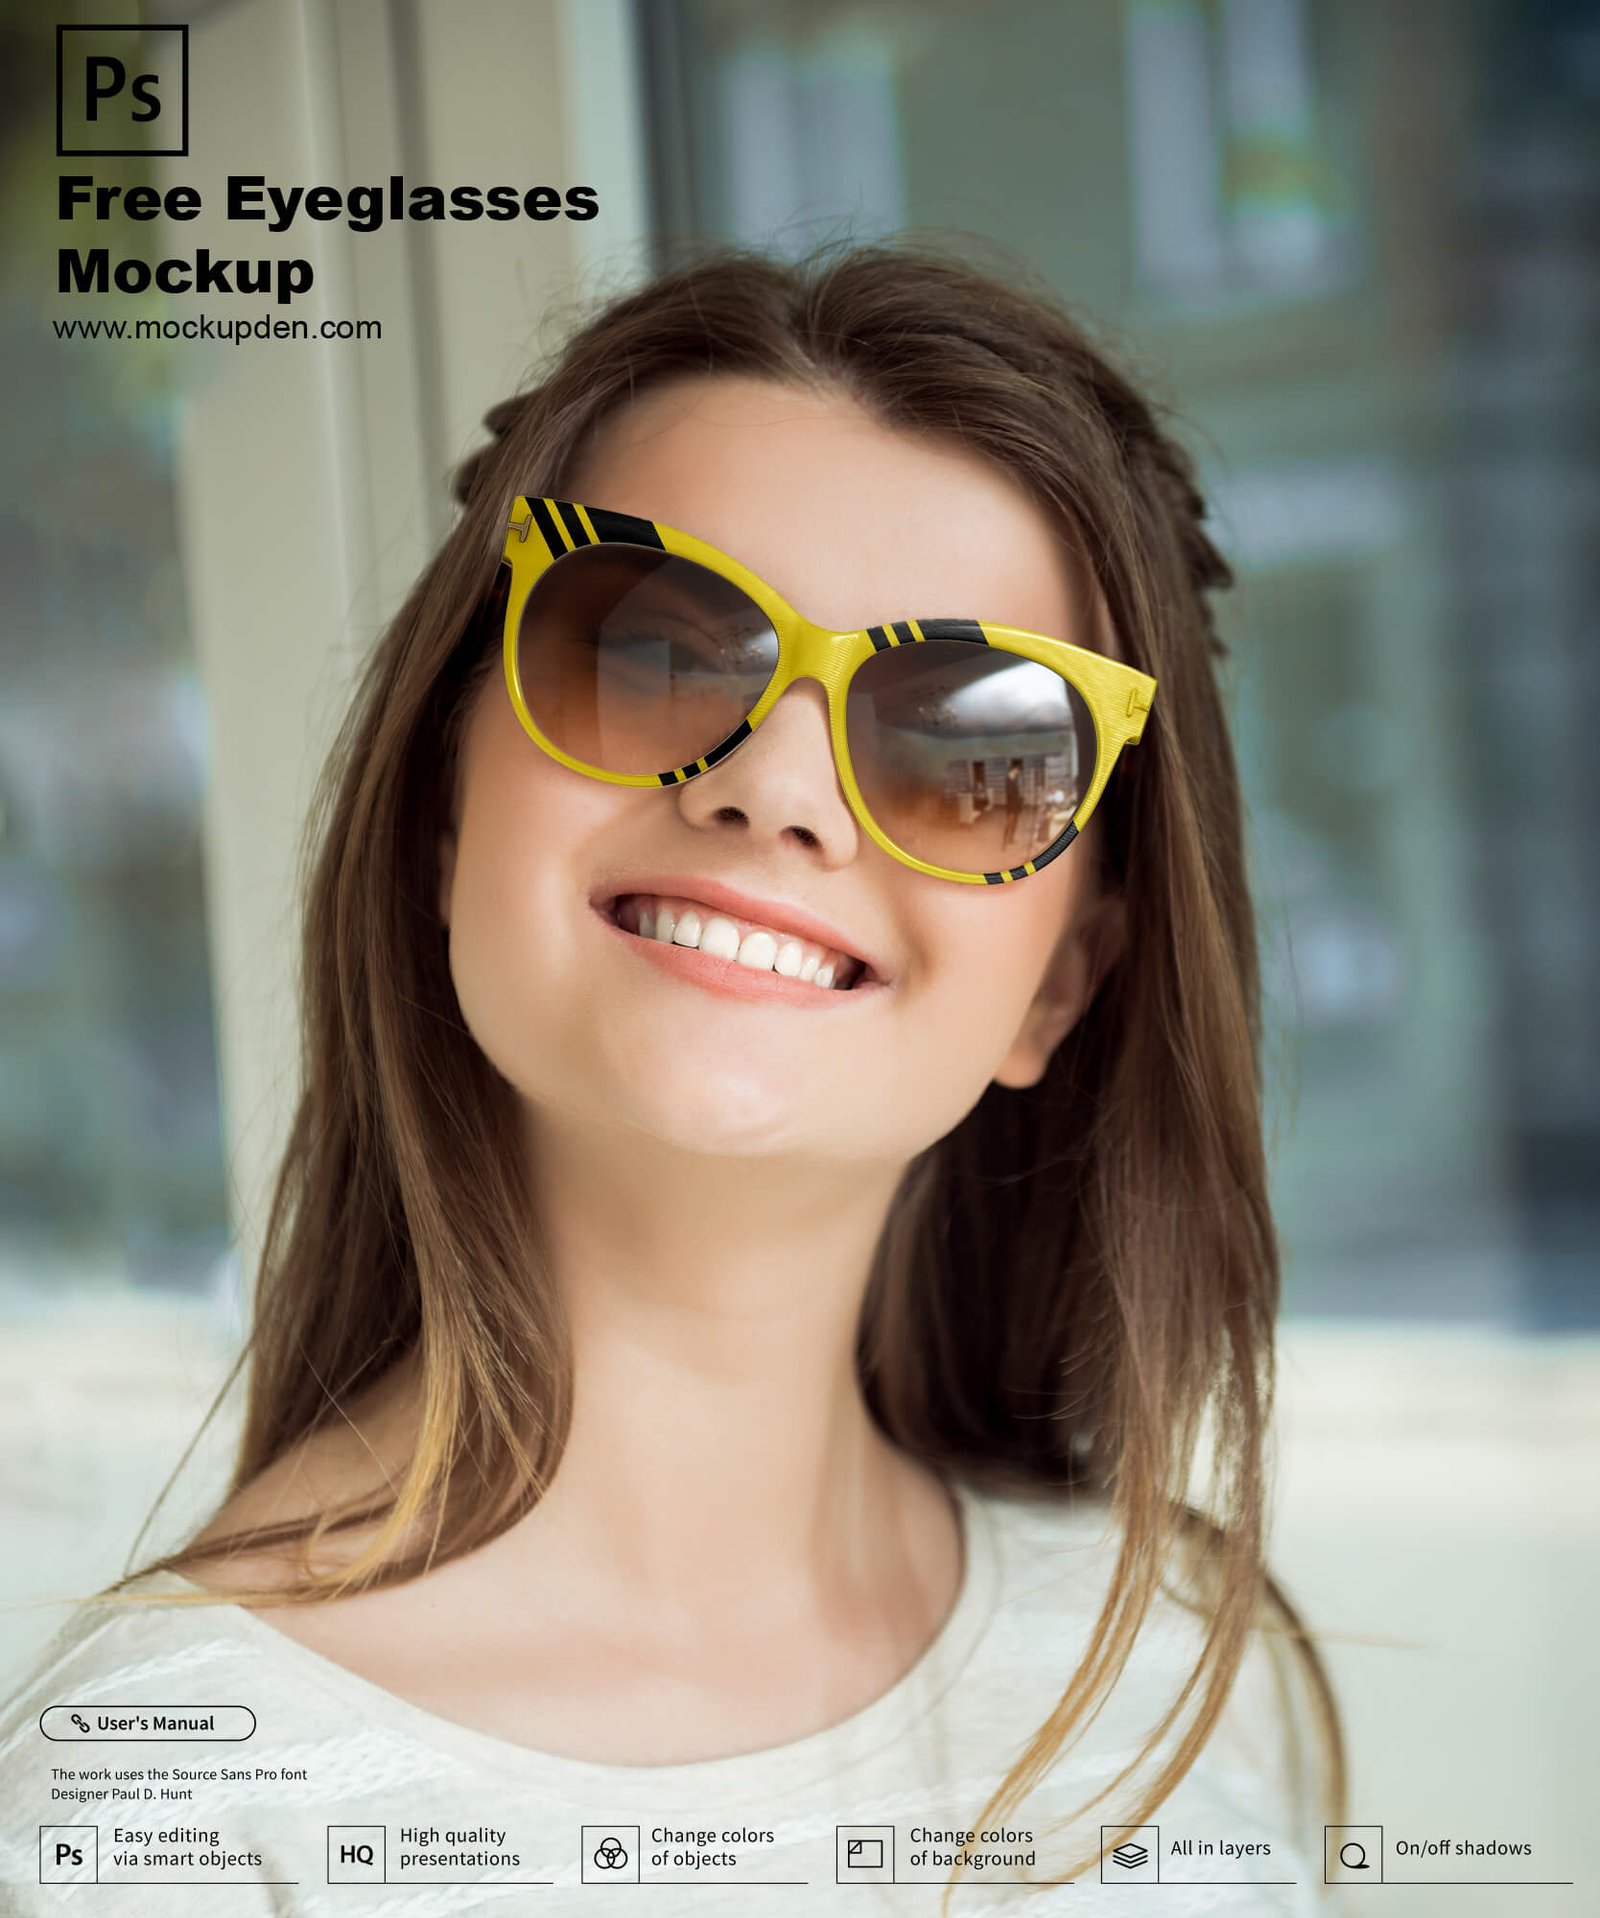 Free Eyeglasses Mockup PSD Template